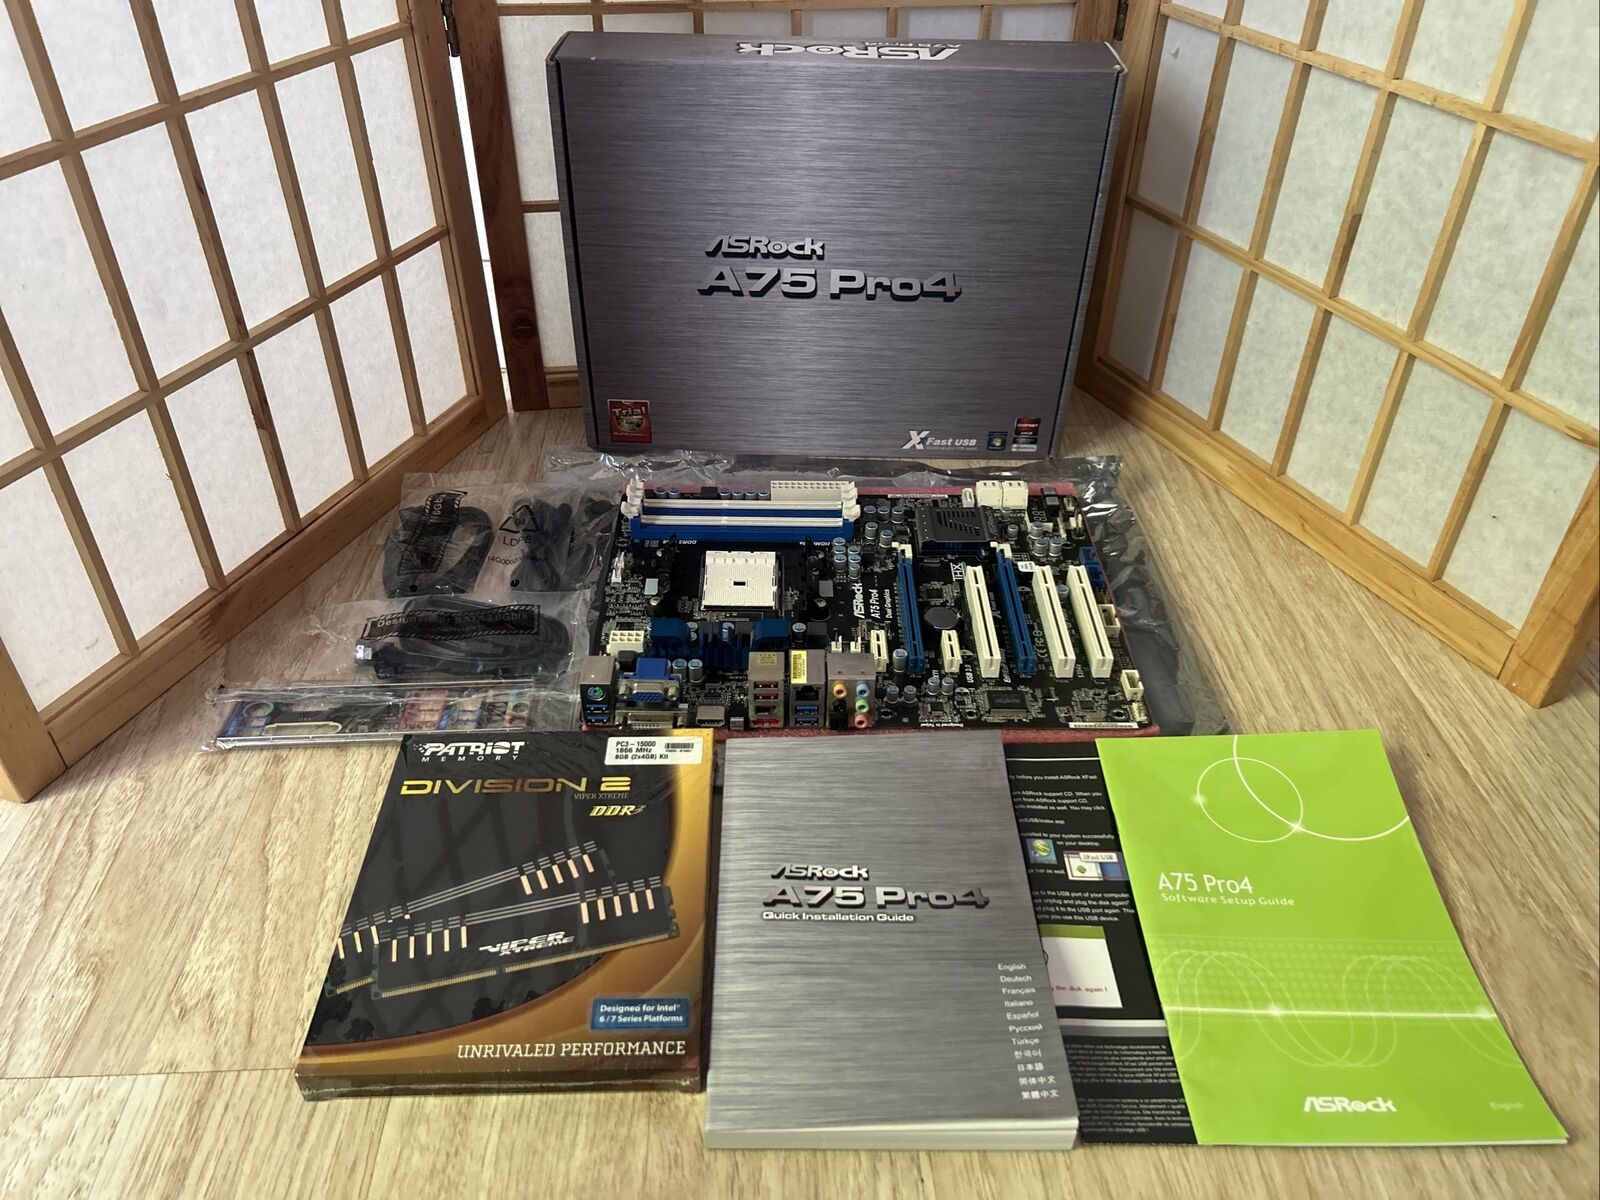 A75 Pro4/MVP ASRock FM1 Gaming Motherboard + Viper Xtreme DDR3 + Manual-Box